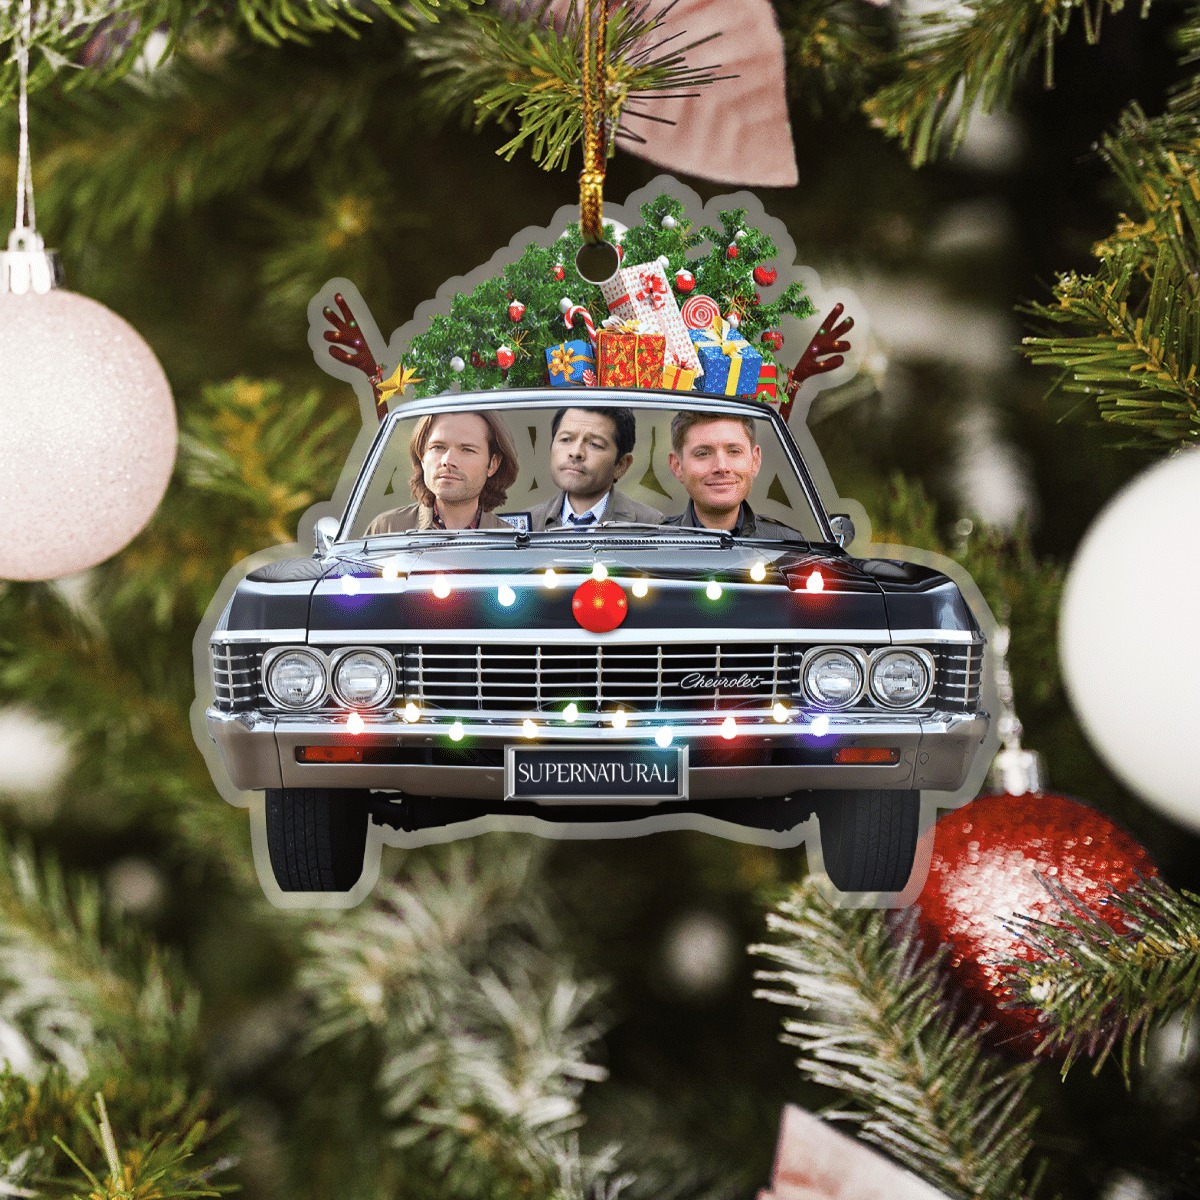 HOT Supernatural Characters Christmas Car hanging ornament 10